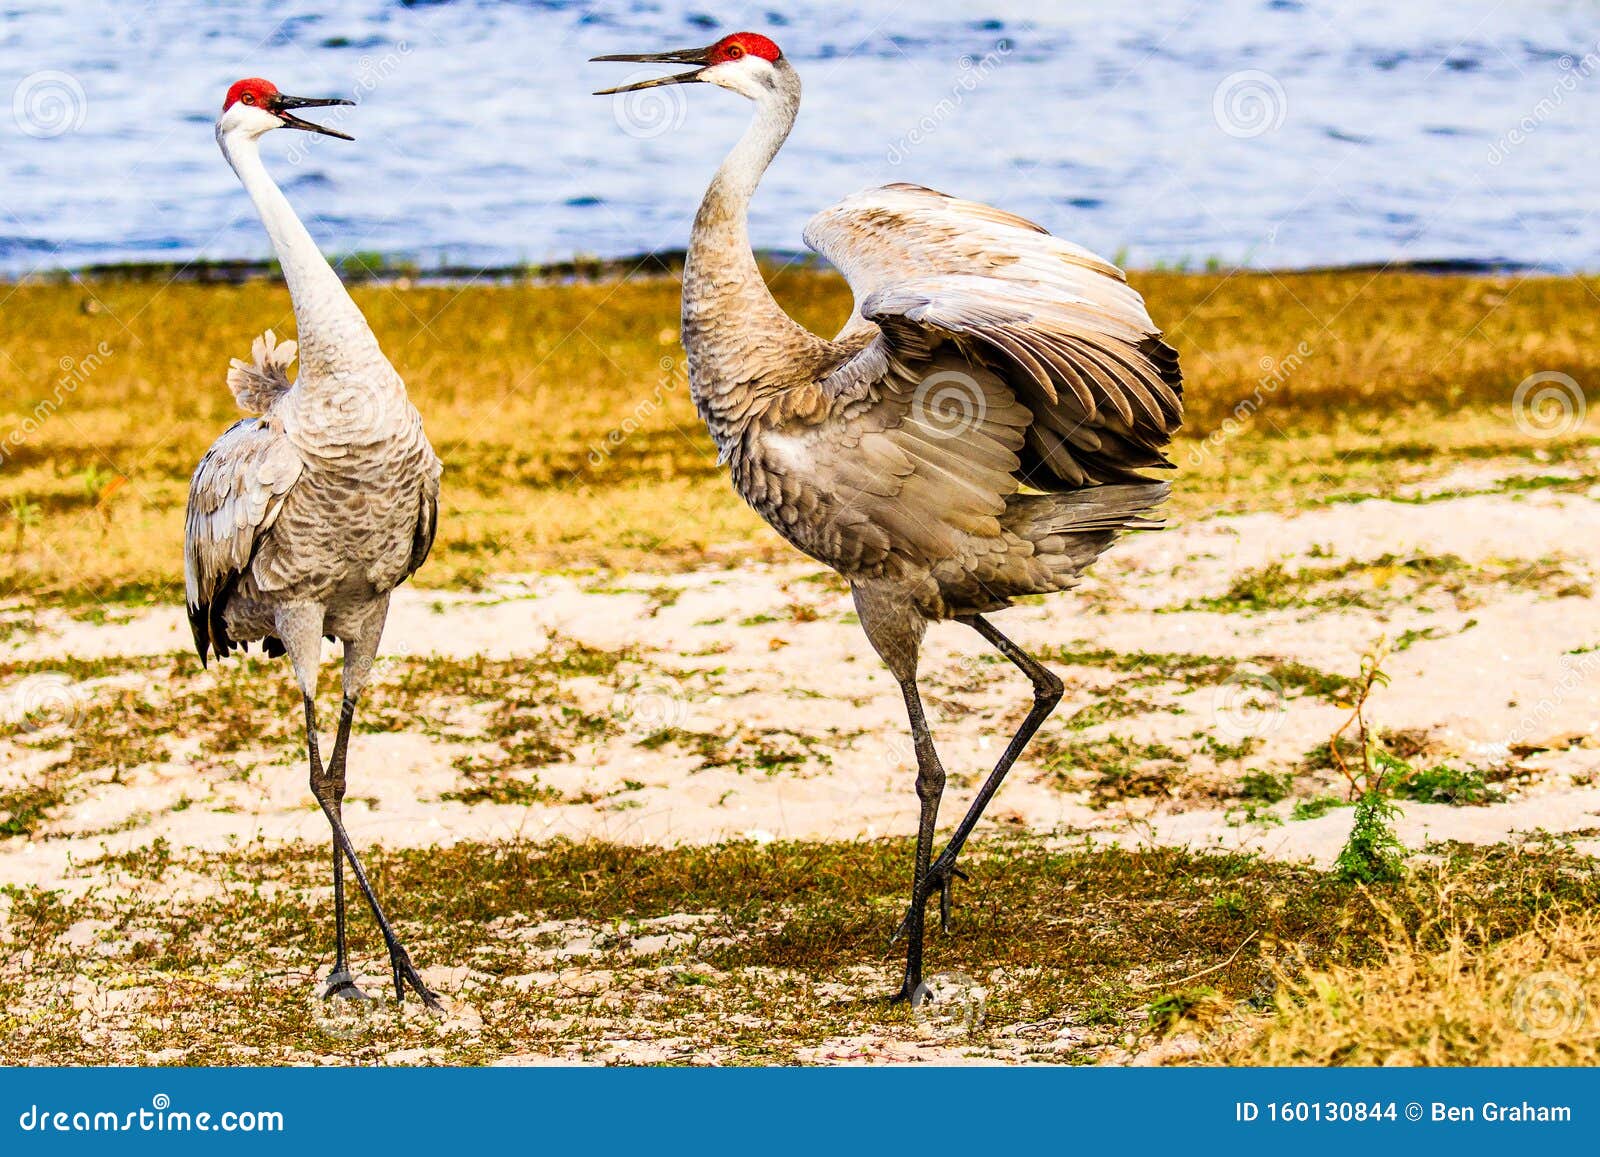 mating pair dance of sandhill cranes